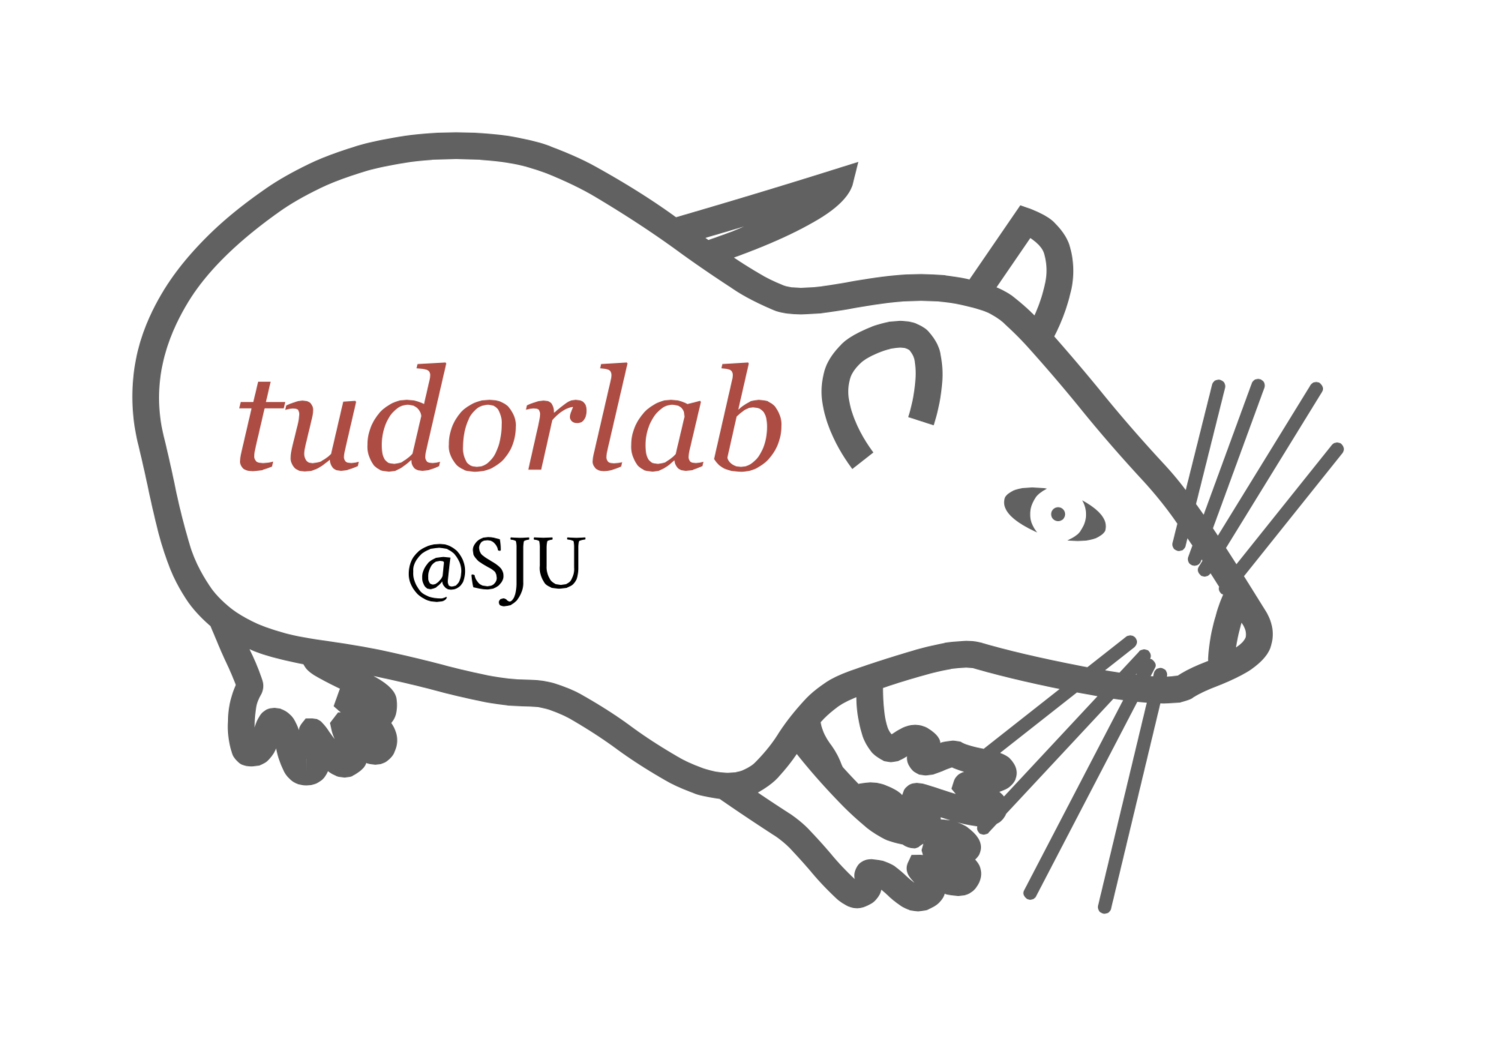 Tudor Lab